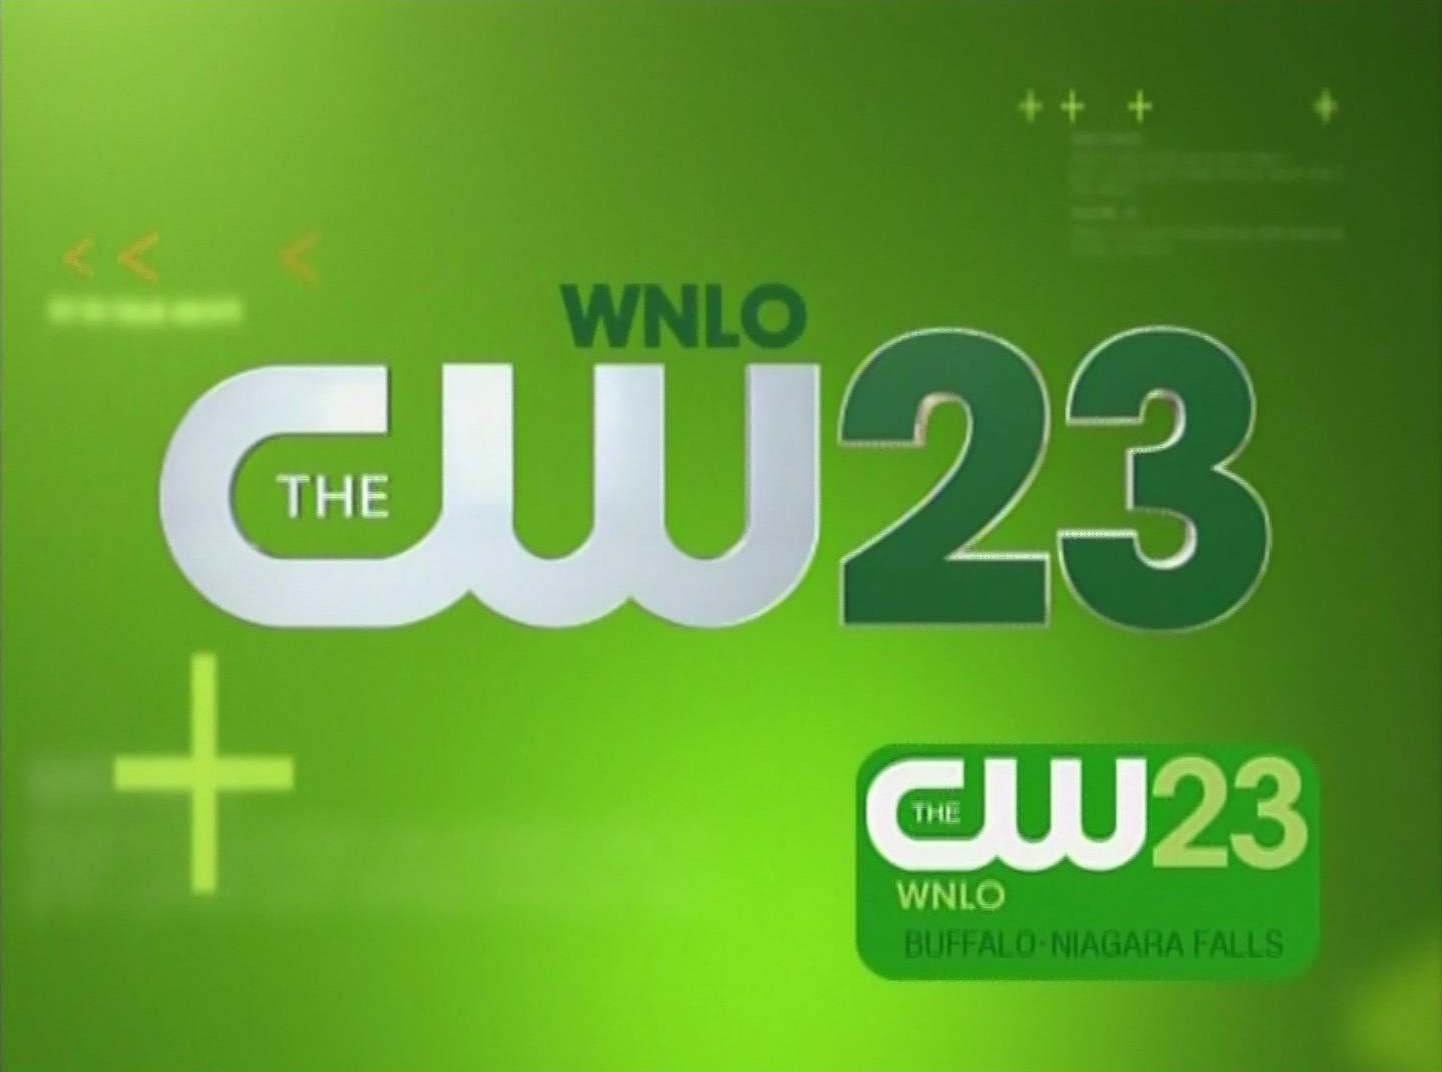 WNLO TV Channel 23 Buffalo, New York